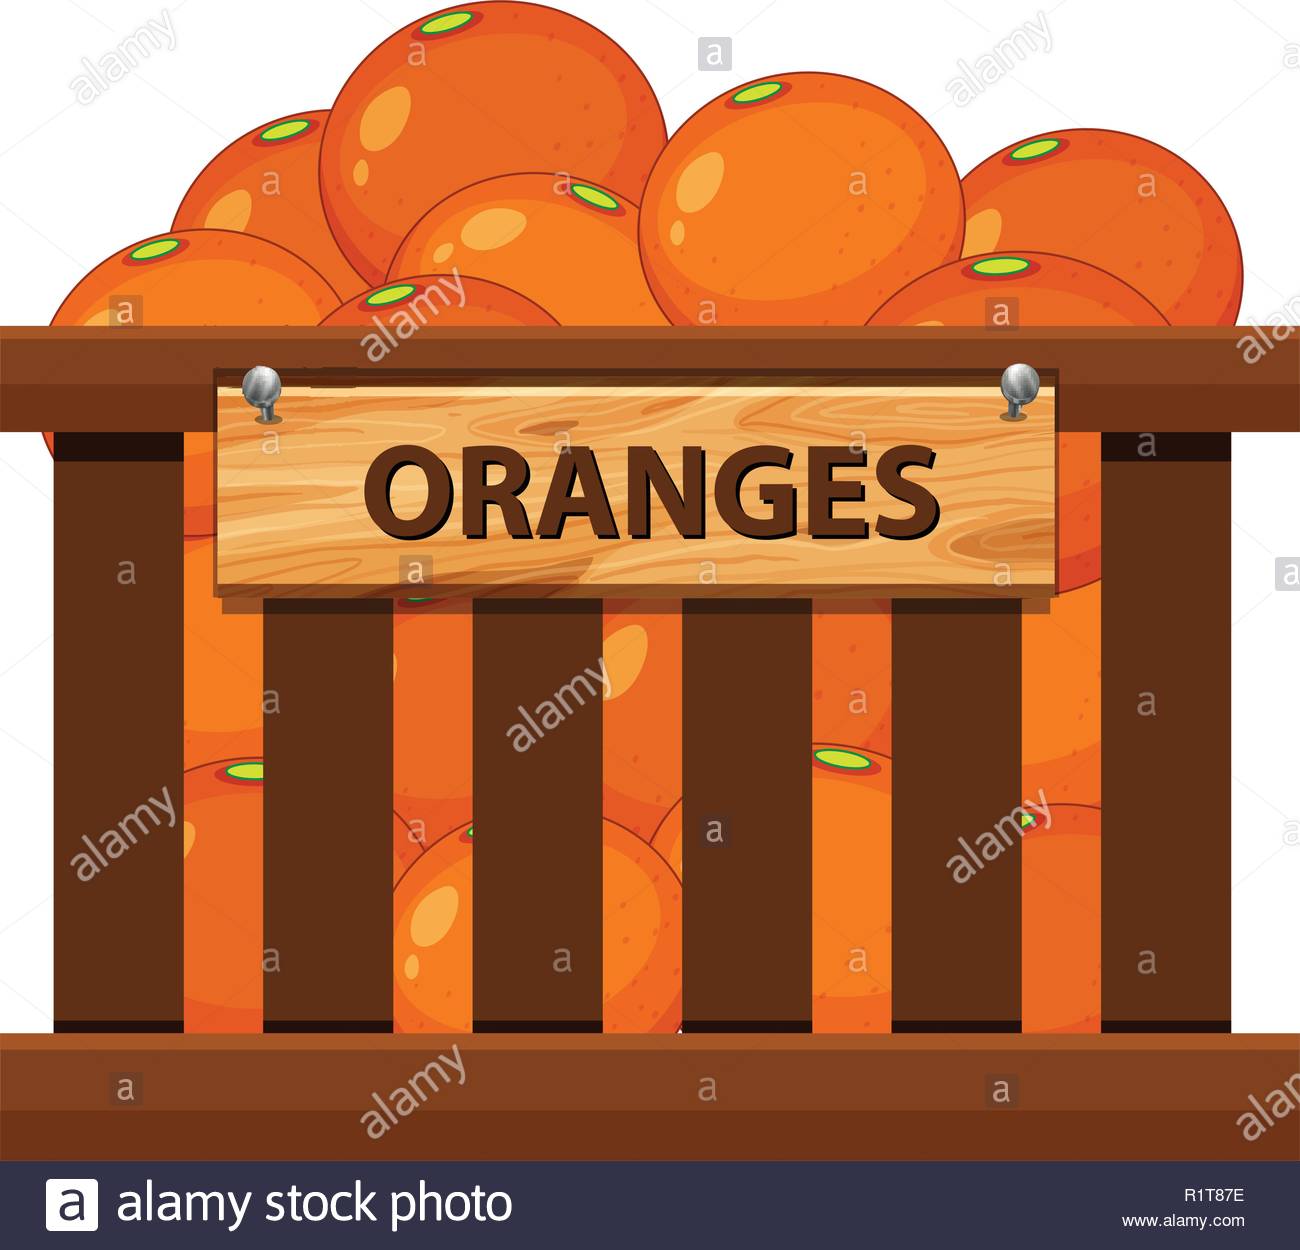 Orange in the wooden crate illustration Stock Vector Art.